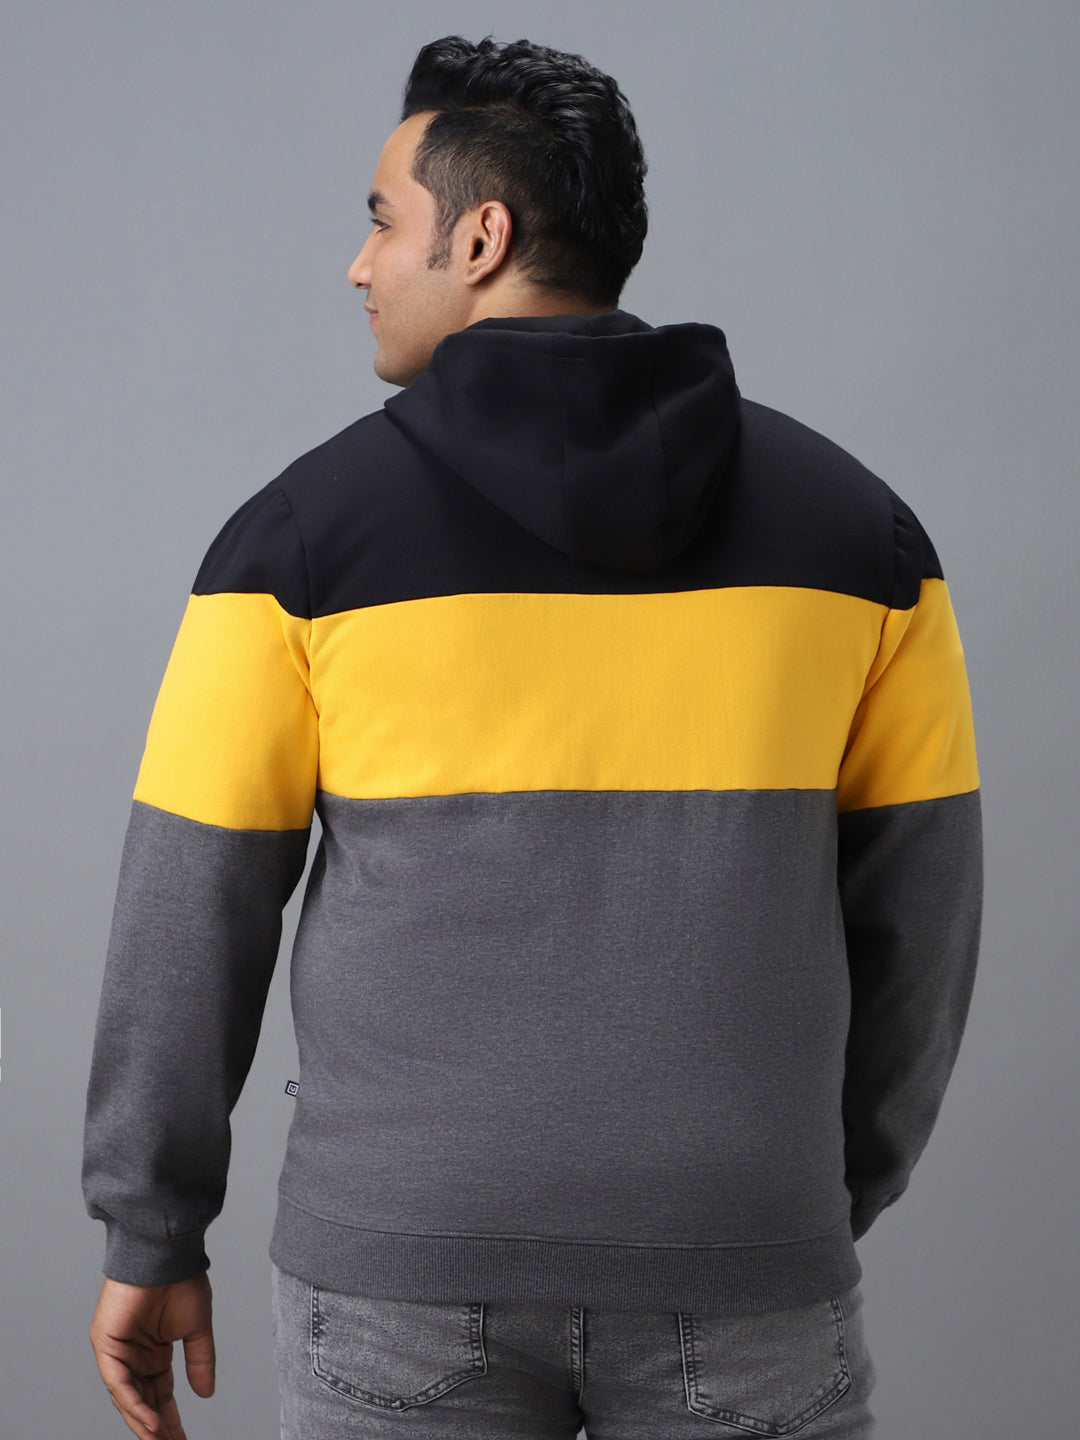 Plus Men's Black, Yellow, Charcoal Cotton Full Sleeve Zippered Hooded Sweatshirt